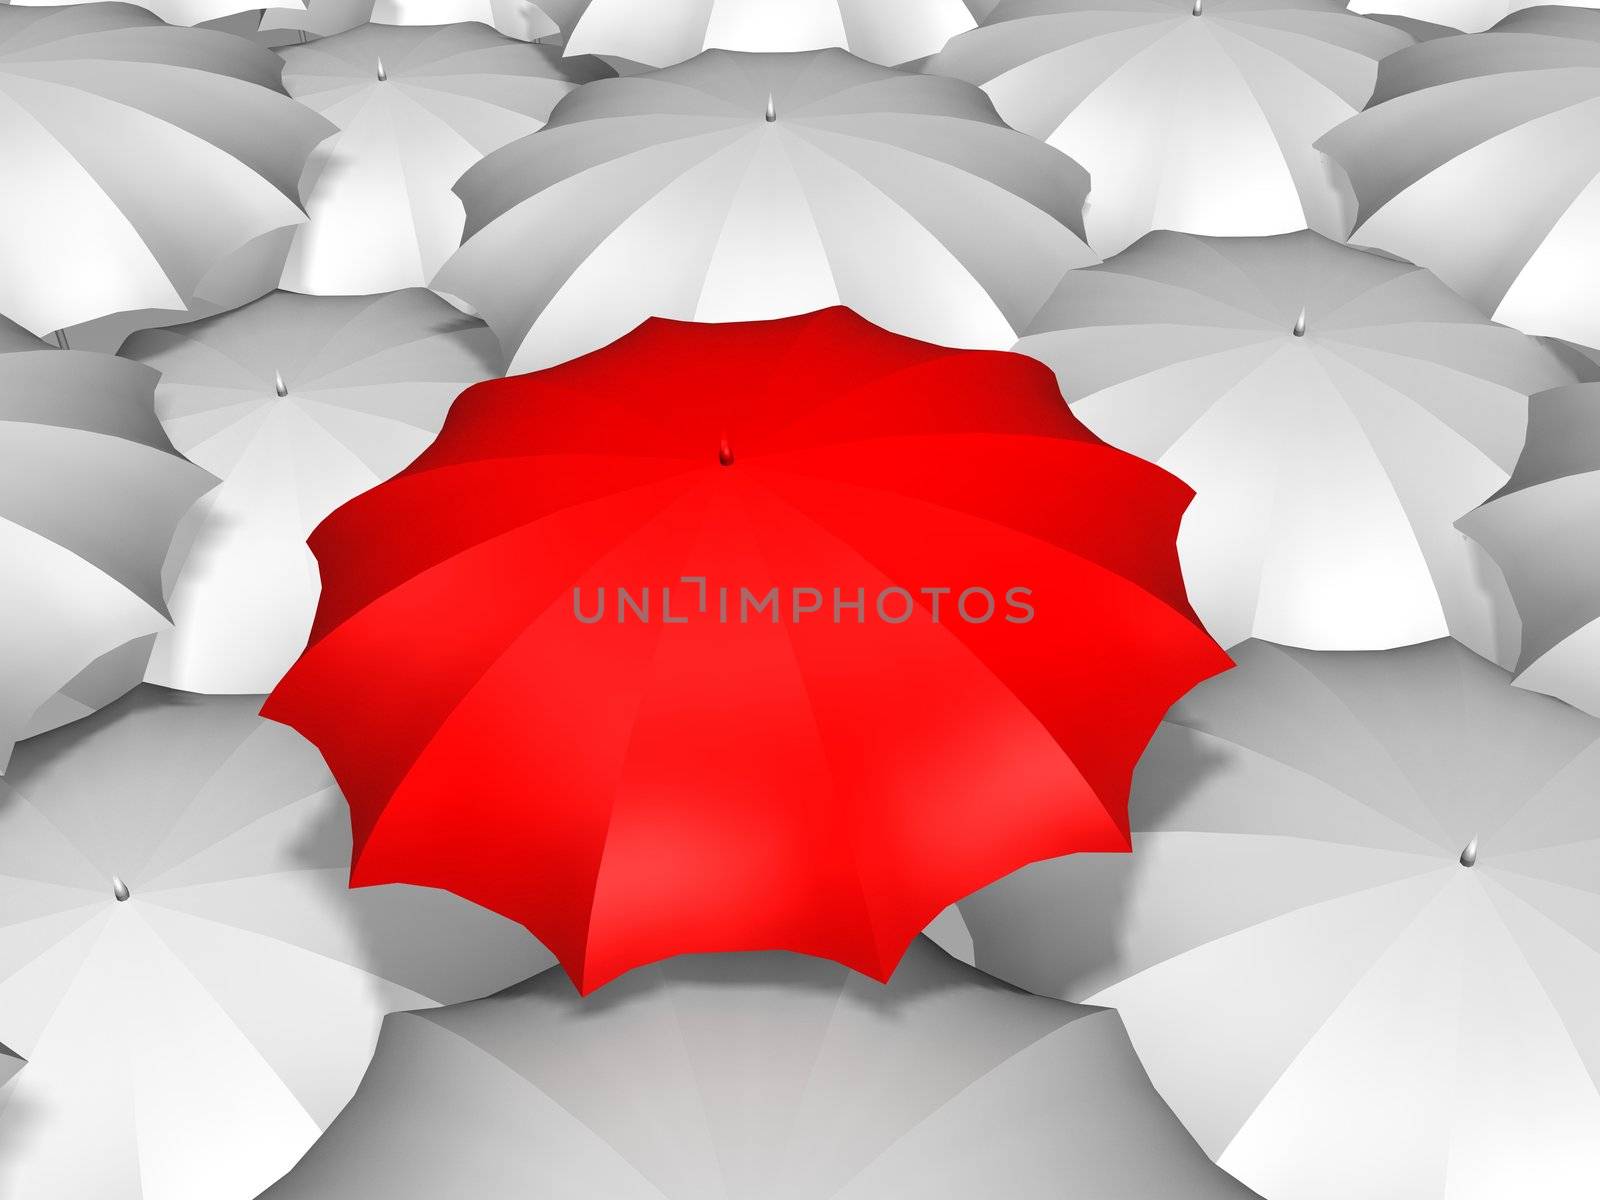 3d illustration - white umbrellas, a red